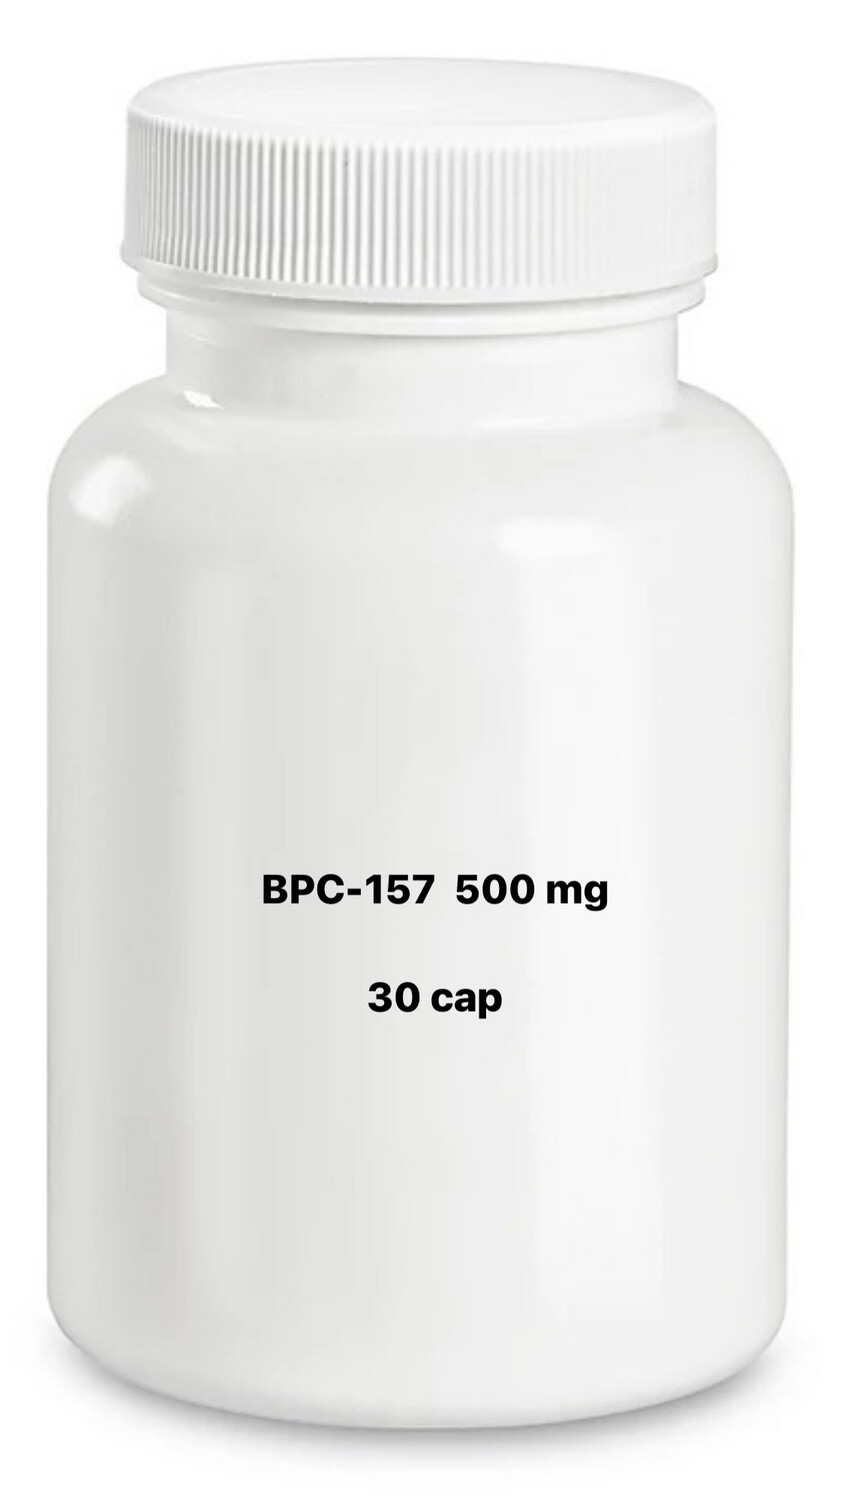 Bio-available BPC-157  500 mg  30 cap